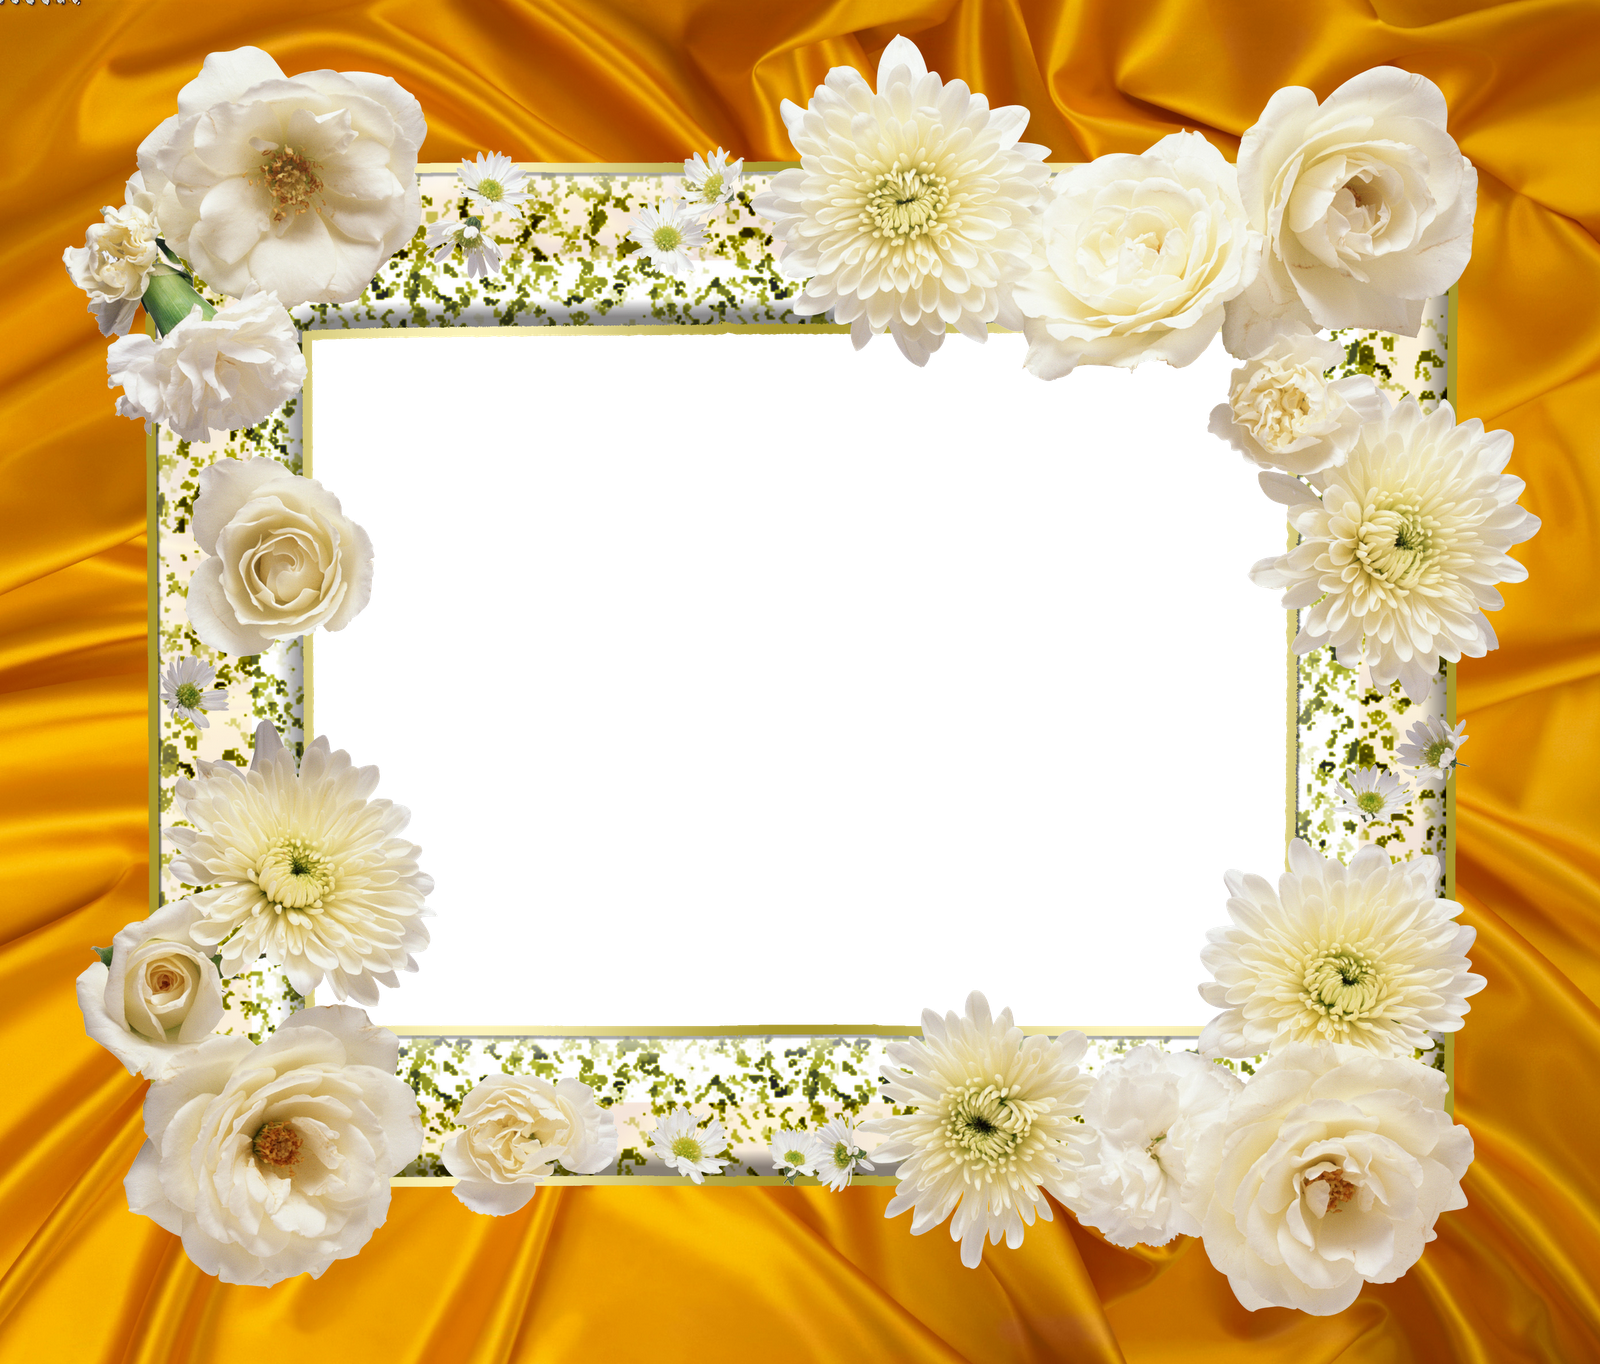 flower frame design blank picture frame #39664